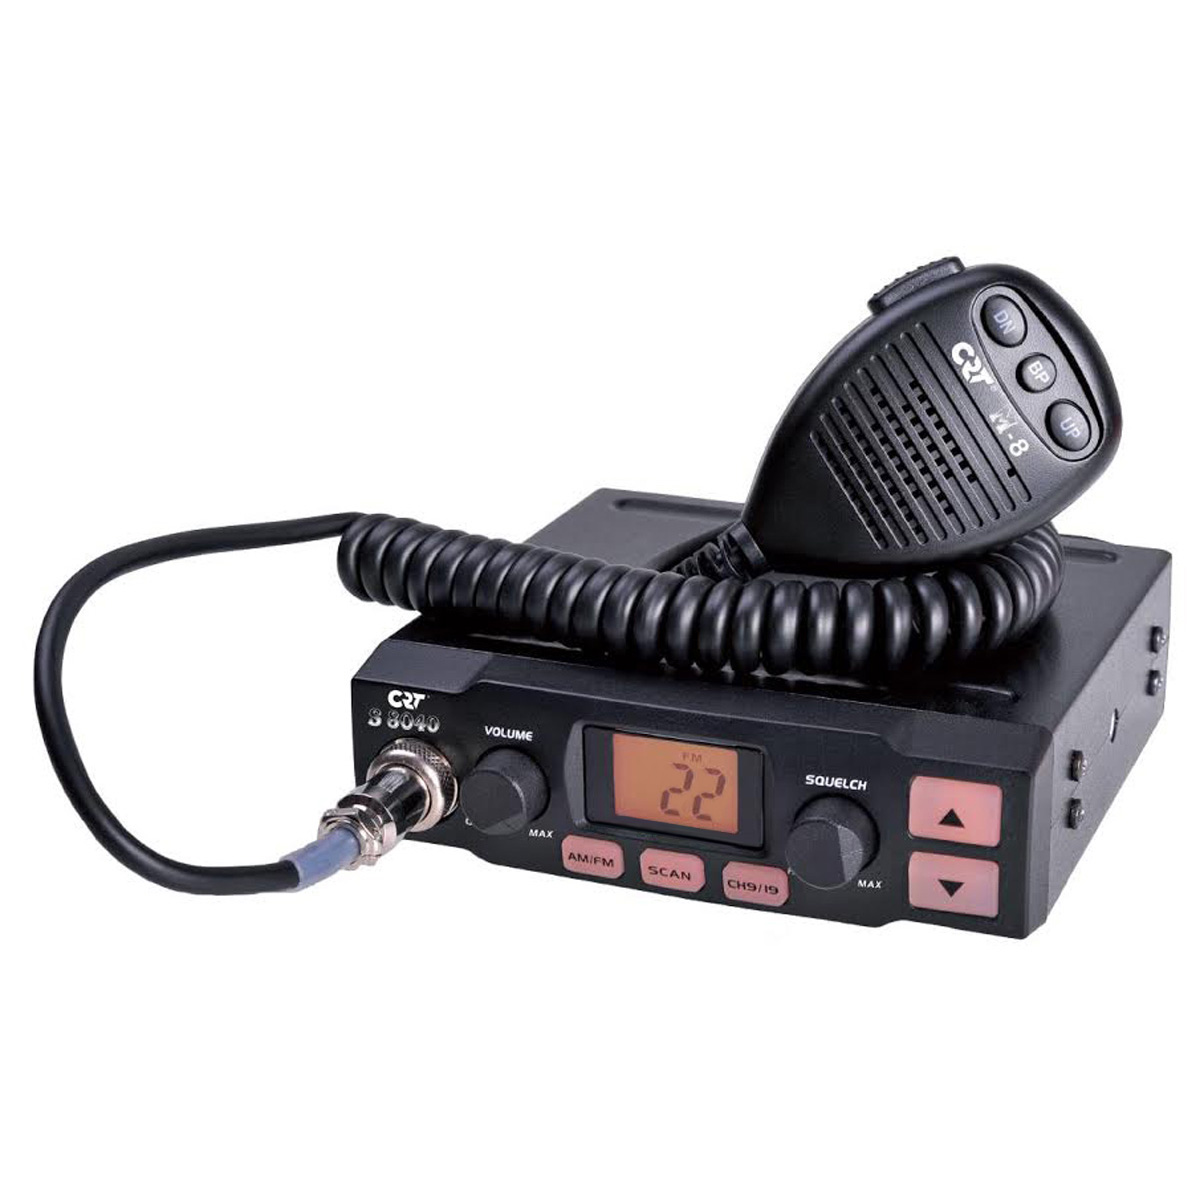 Statie radio CB CRT S 8040, 4W, 12V, Scan, ASQ, AM-FM image0